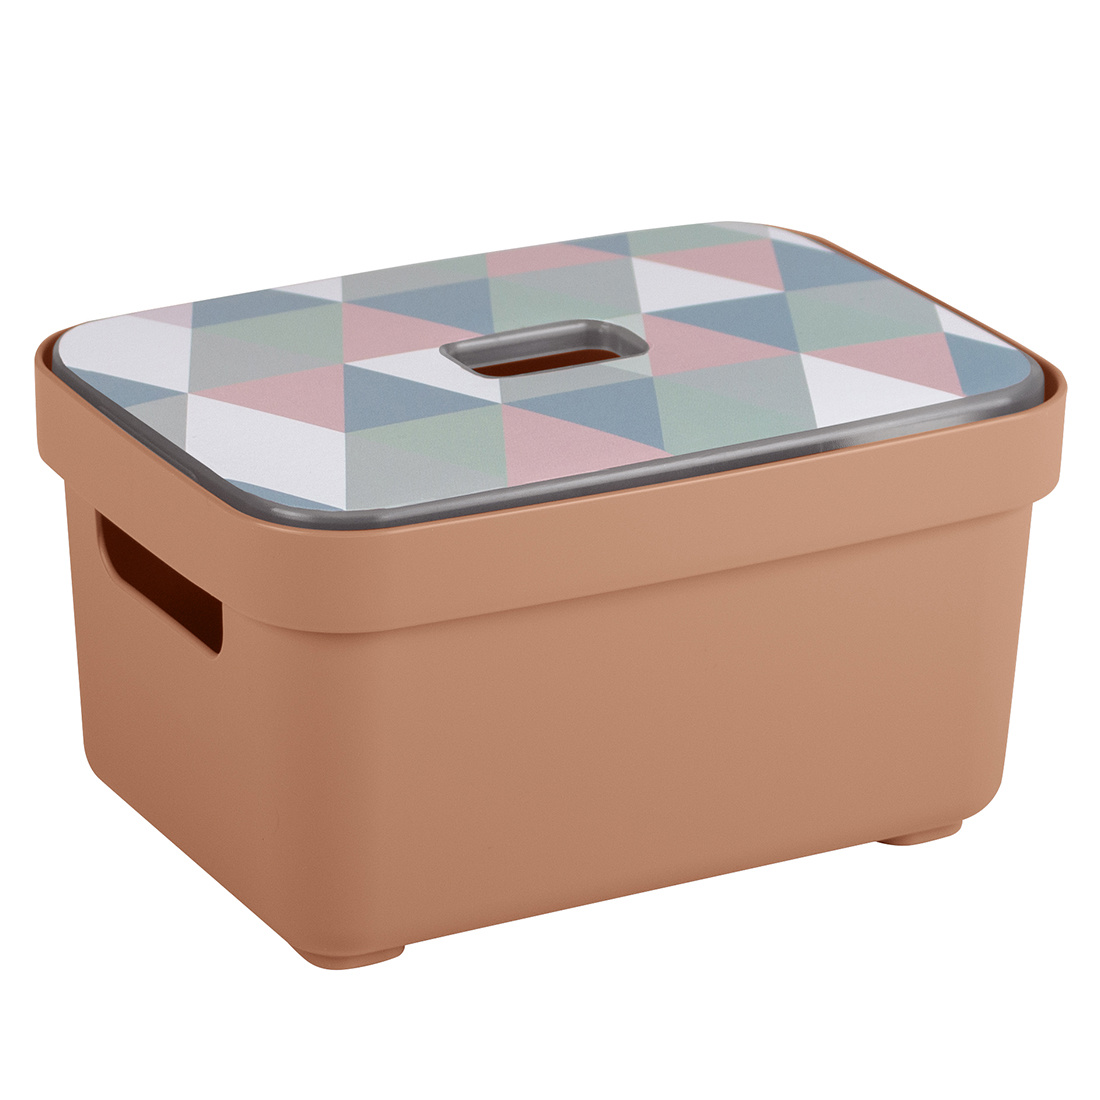 Sigma home storage box 2.5L terracotta